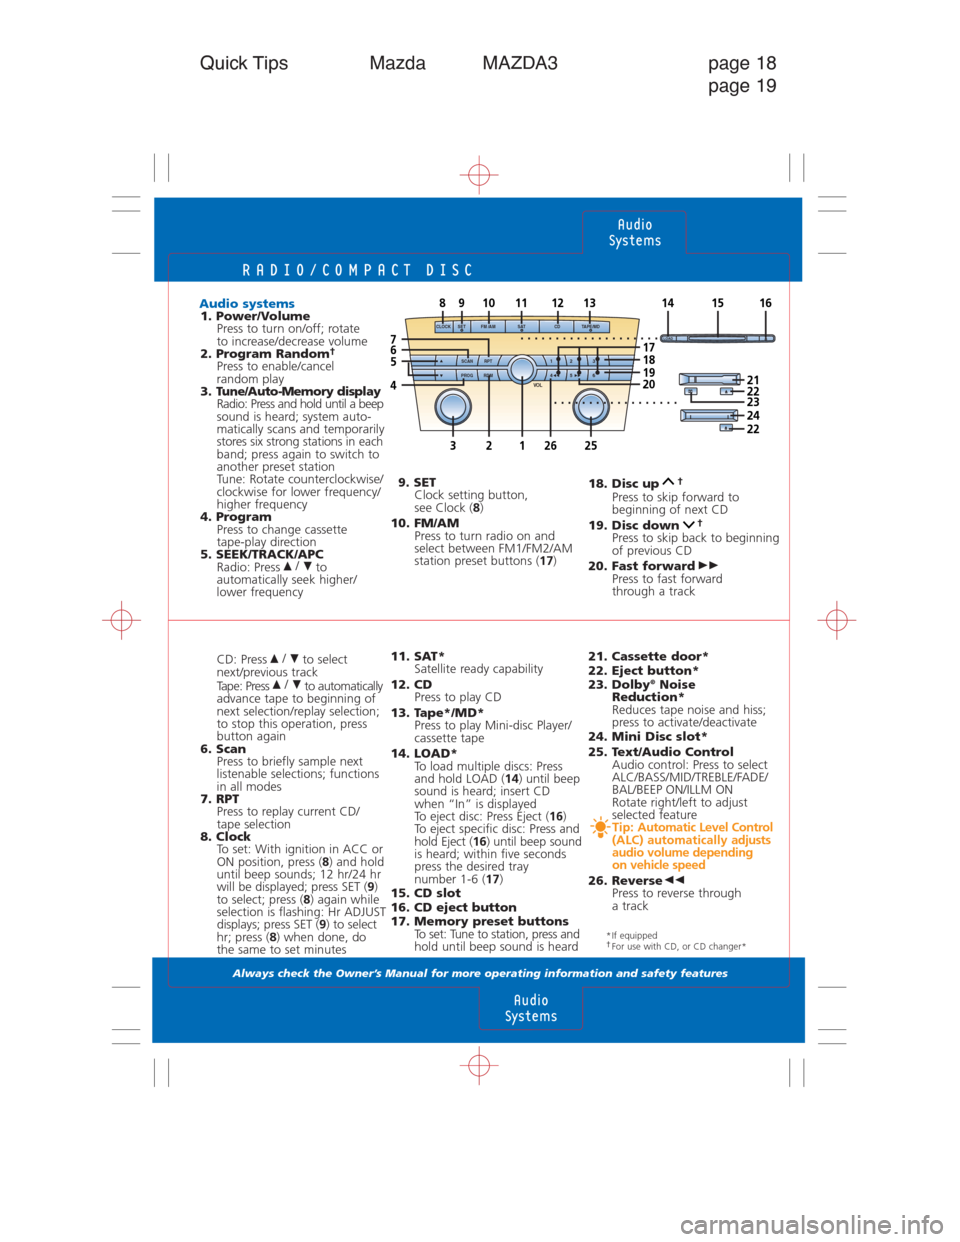 MAZDA MODEL 3 HATCHBACK 2005  Quick Tips (in English) 
RADIO/COMPACT DISC
Always check the Owner’s Manual for more operating information and safety features 
CD: Press to select
next/previous track
Tape: Press to automatically
advance tape to beginnin